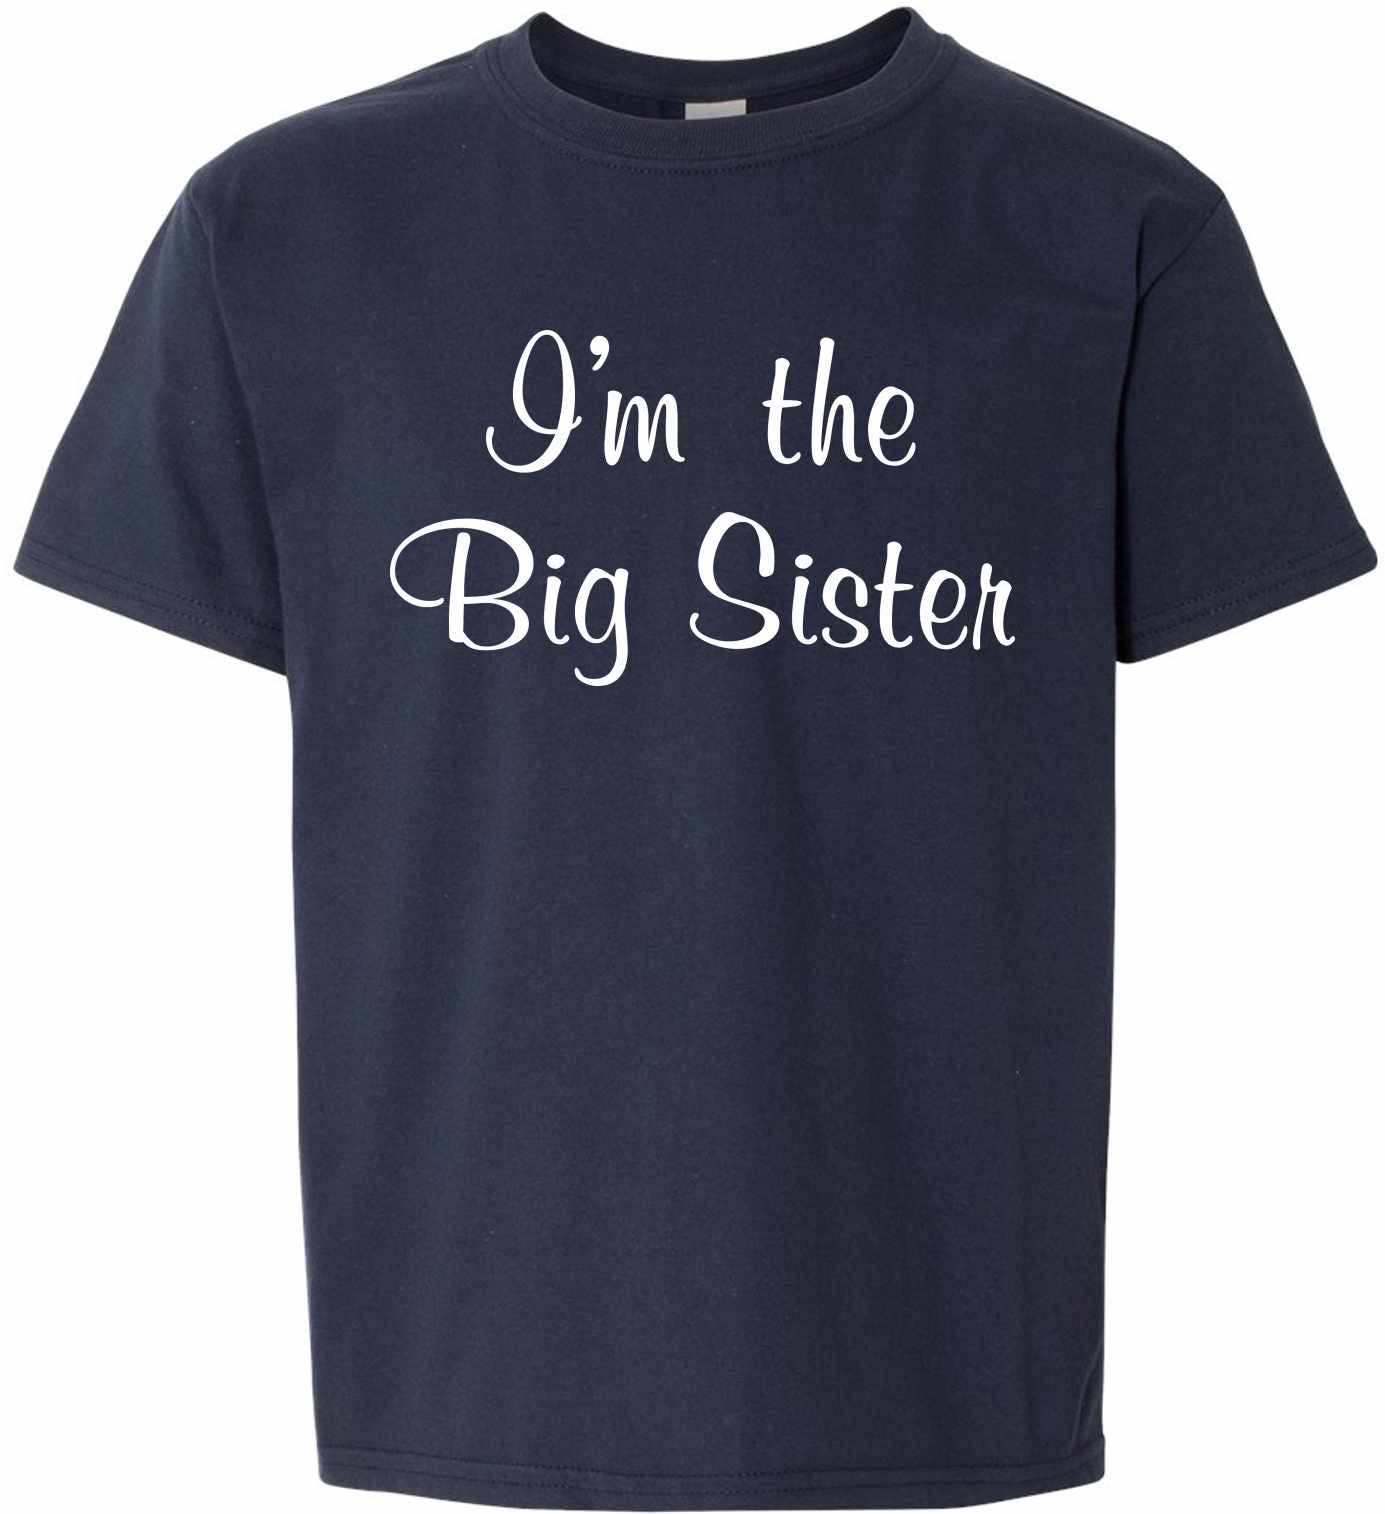 I'm the Big Sister on Kids T-Shirt (#1245-201)